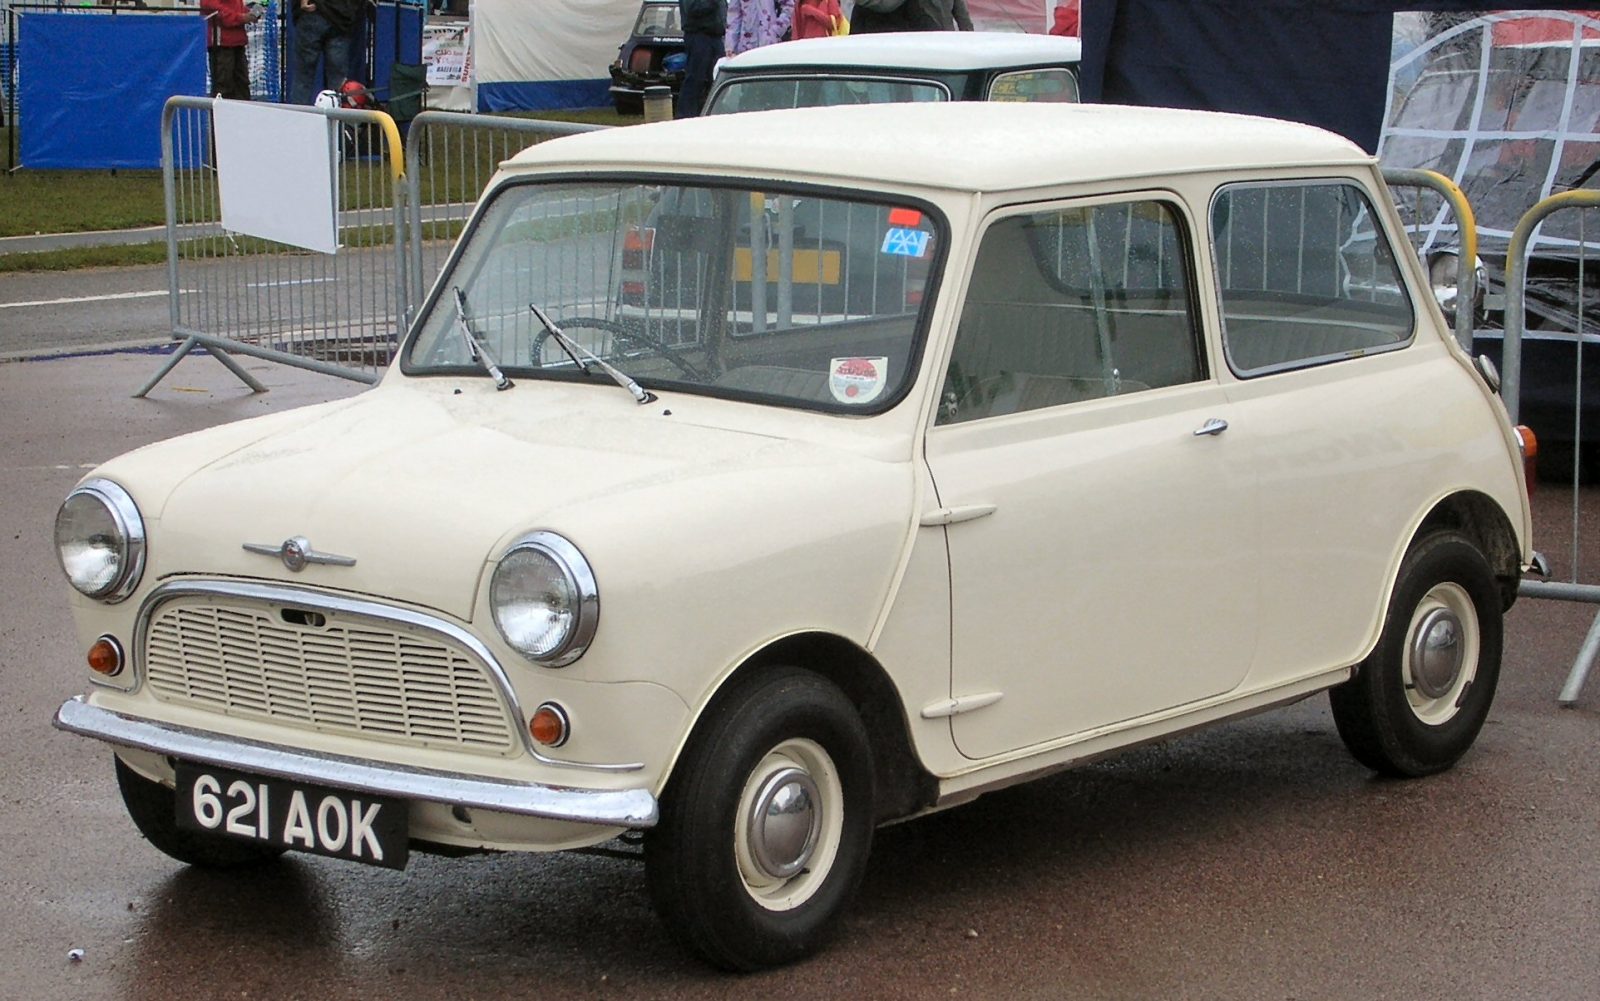 26 août 1959 – Début officiel de la marque Mini